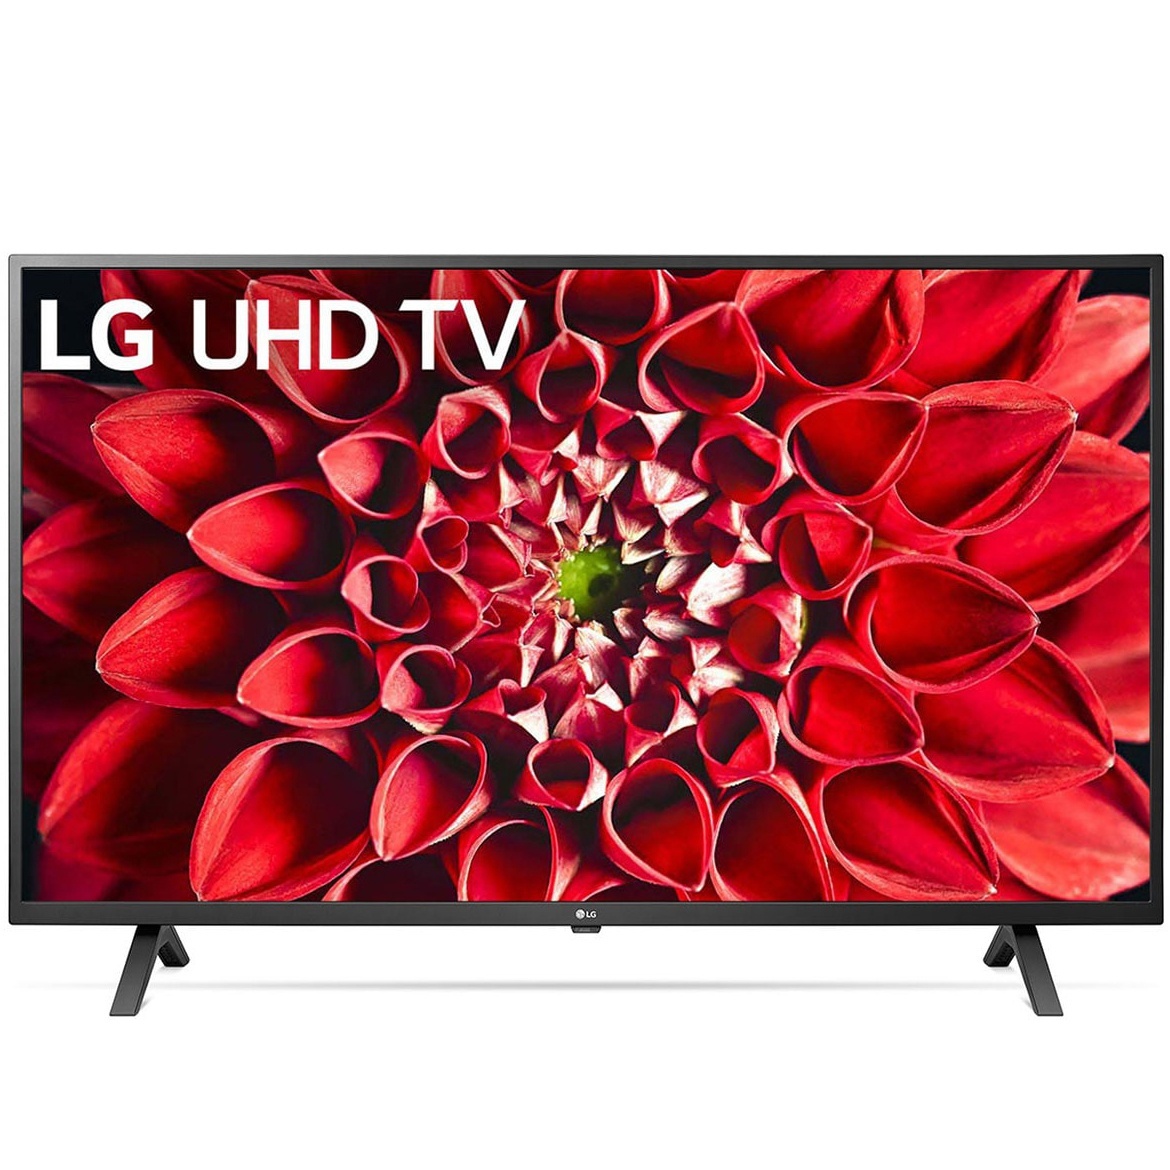 LG Smart TV 55 inch IPS 4K UHD 55UN7000PTA Active HDR chính hãng model 2020